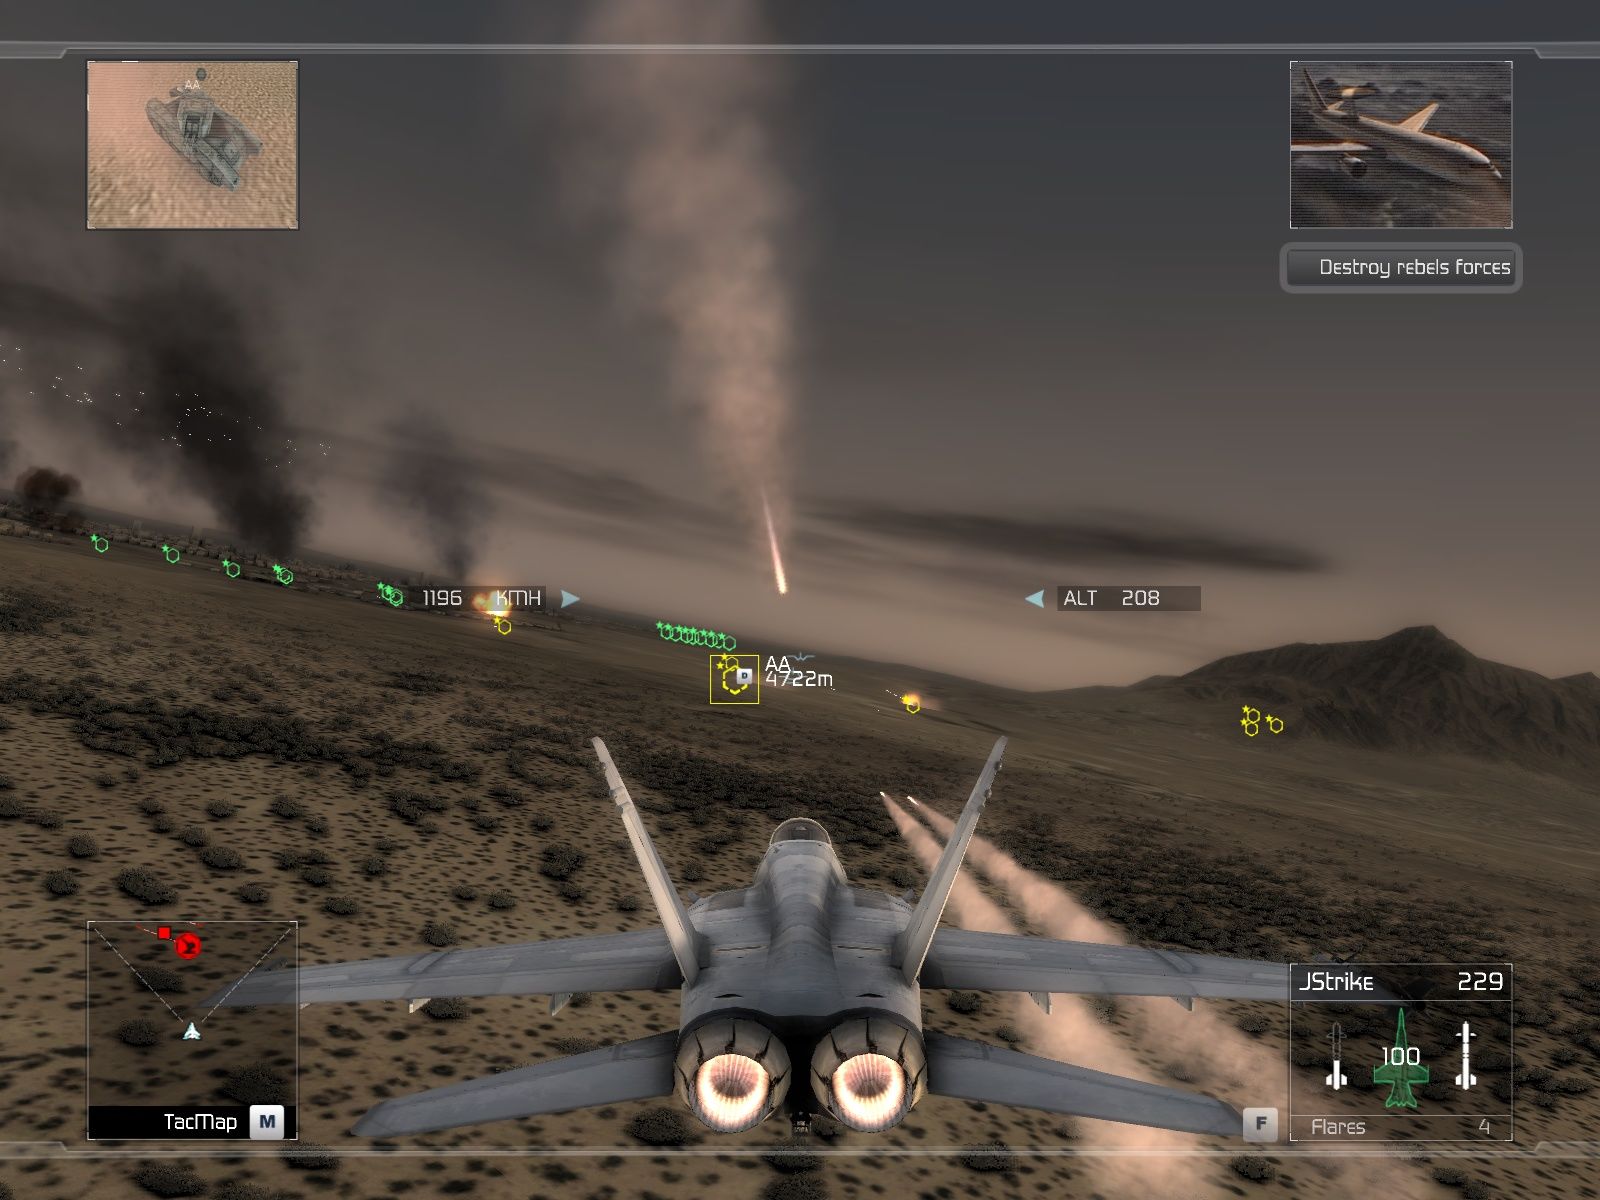 fighter jet games ipad